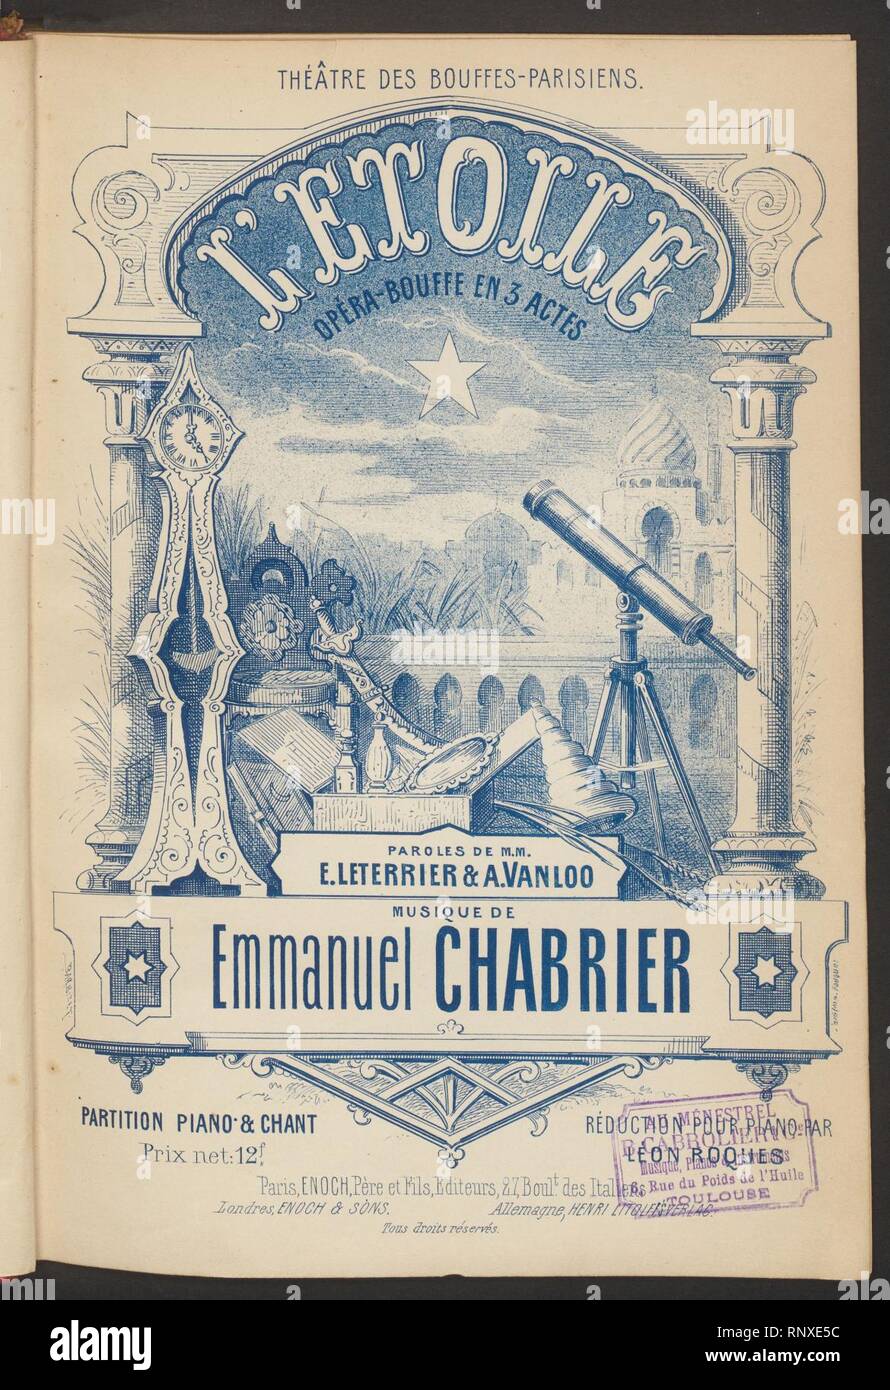 Chabrier, Emmanuel - Etoile. Stock Photo